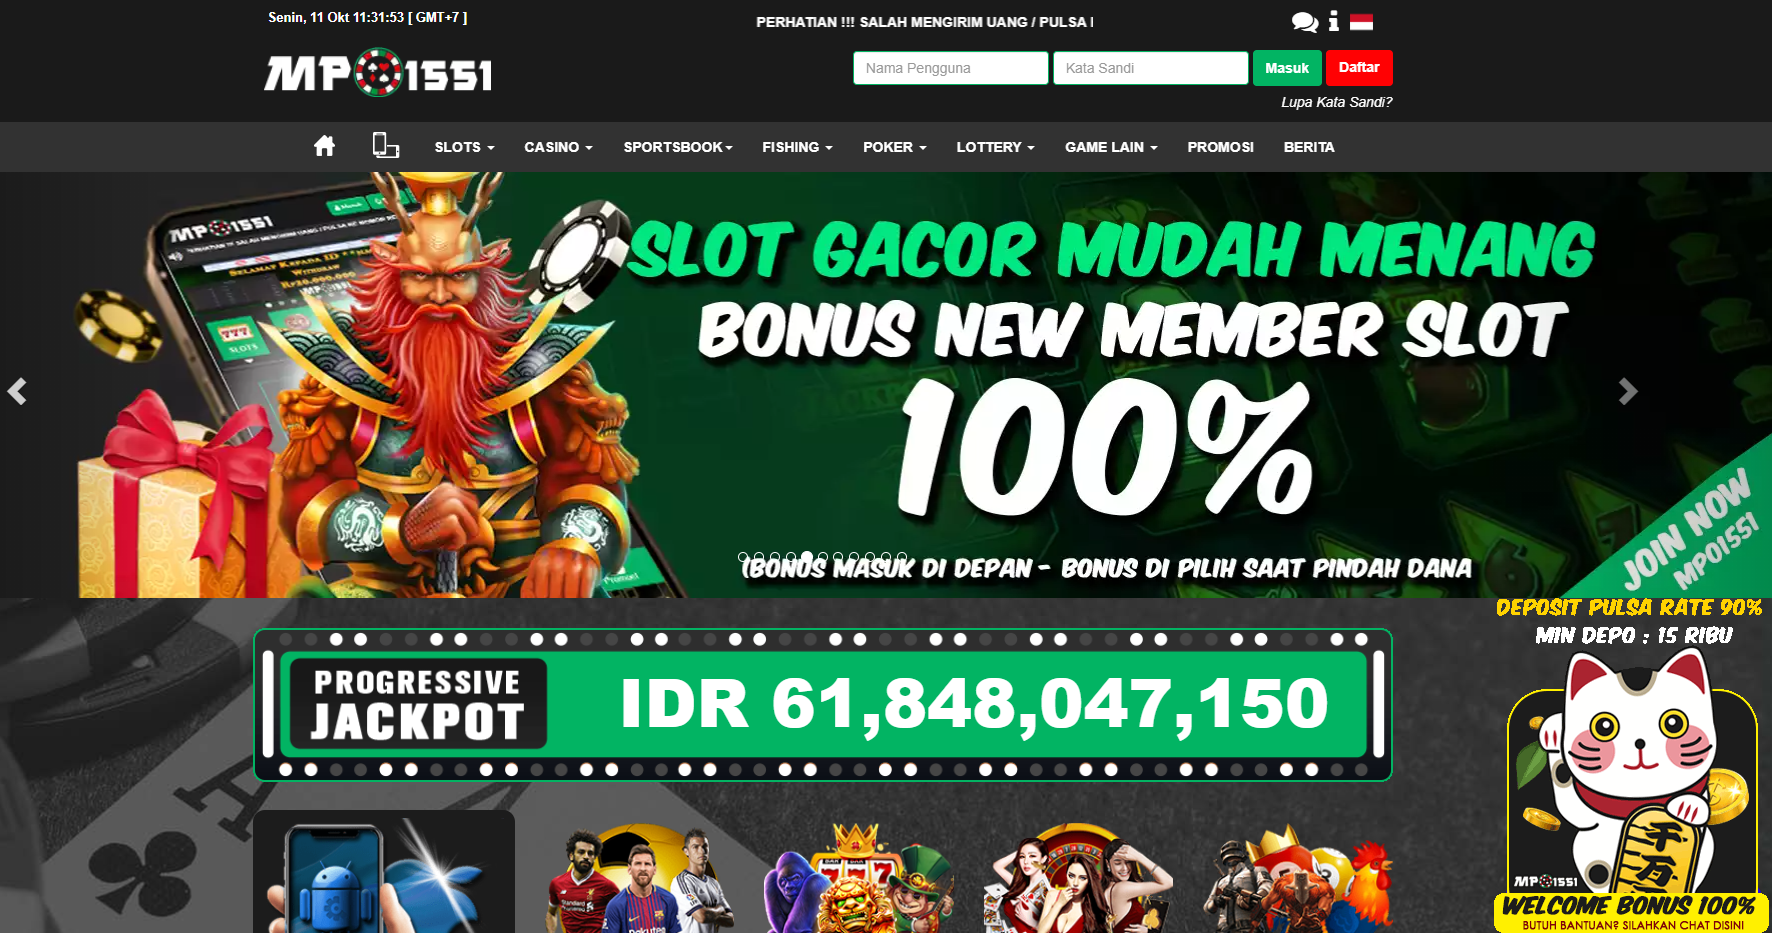 MPO1551 Situs Judi Mpo Slot Online Joker123 Deposit Dana